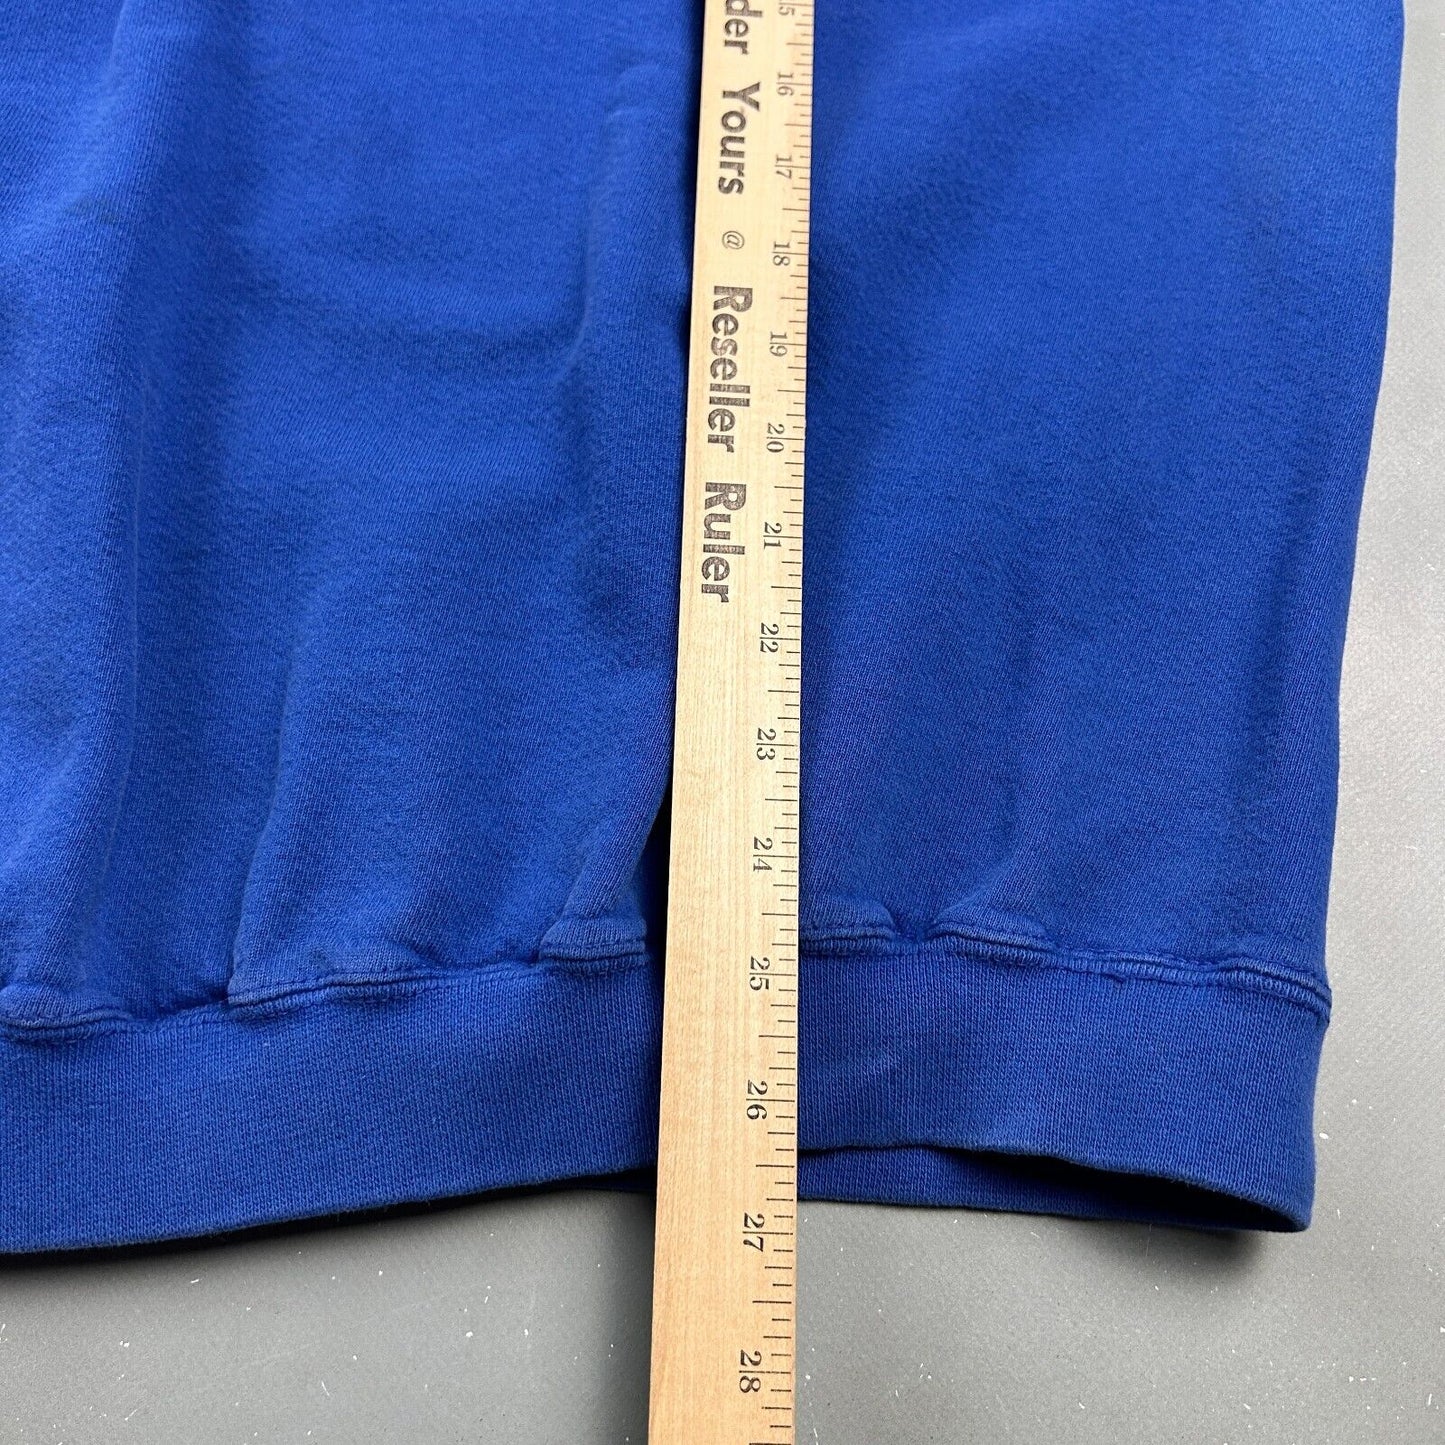 VINTAGE 90s | NIKE Sm Embroidered Swoosh Blue Crewneck Sweater sz L Adult